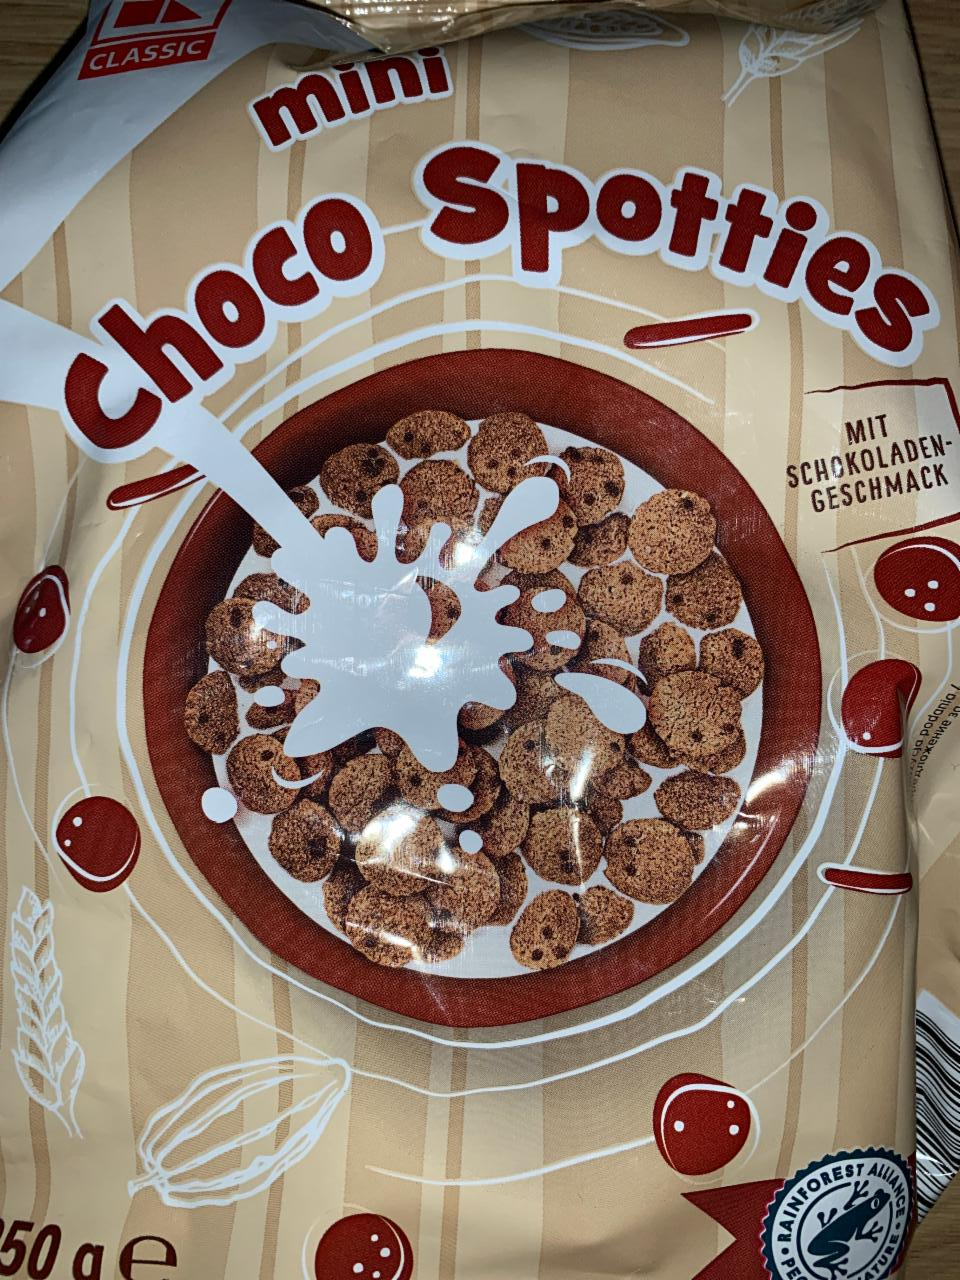 Fotografie - Mini Choco Spotties K-Classic